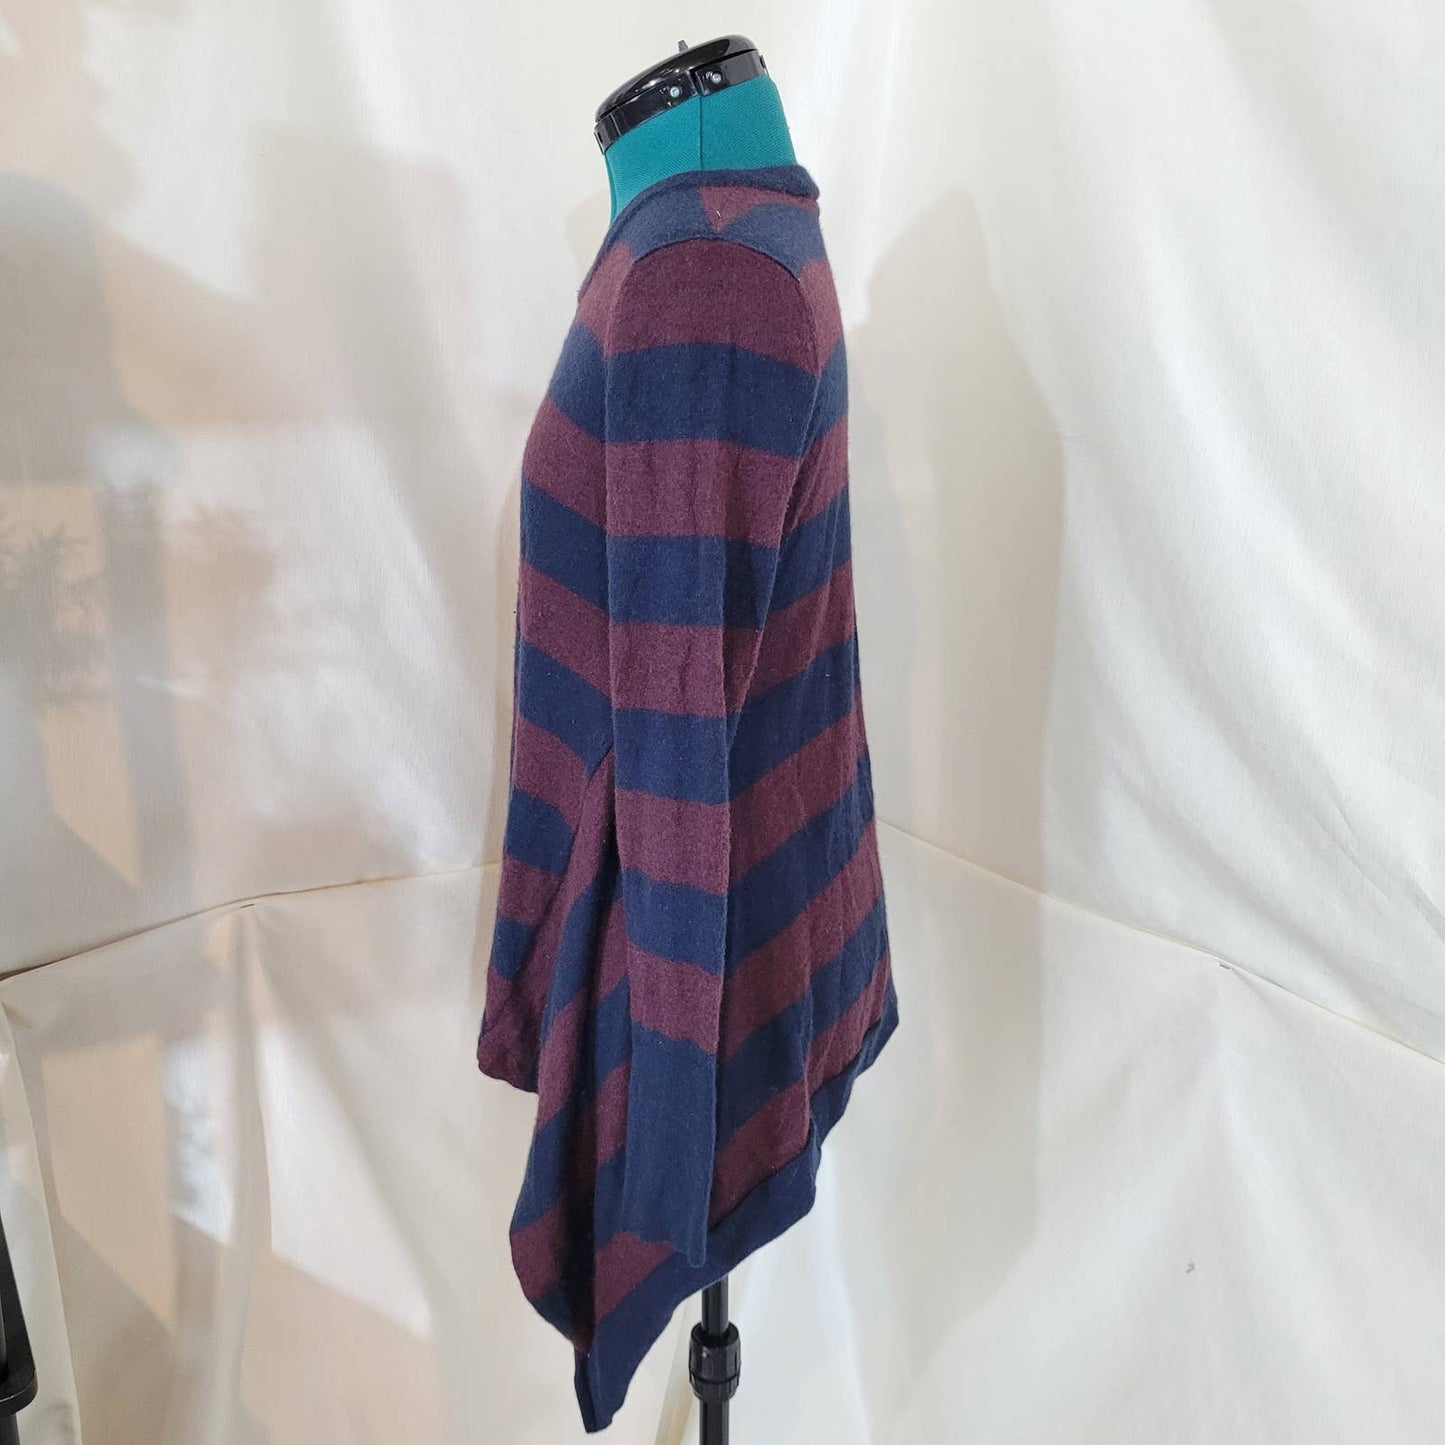 Autumn Cashmere Burgundy and Navy Striped Cashmere Sweater - Size Medium